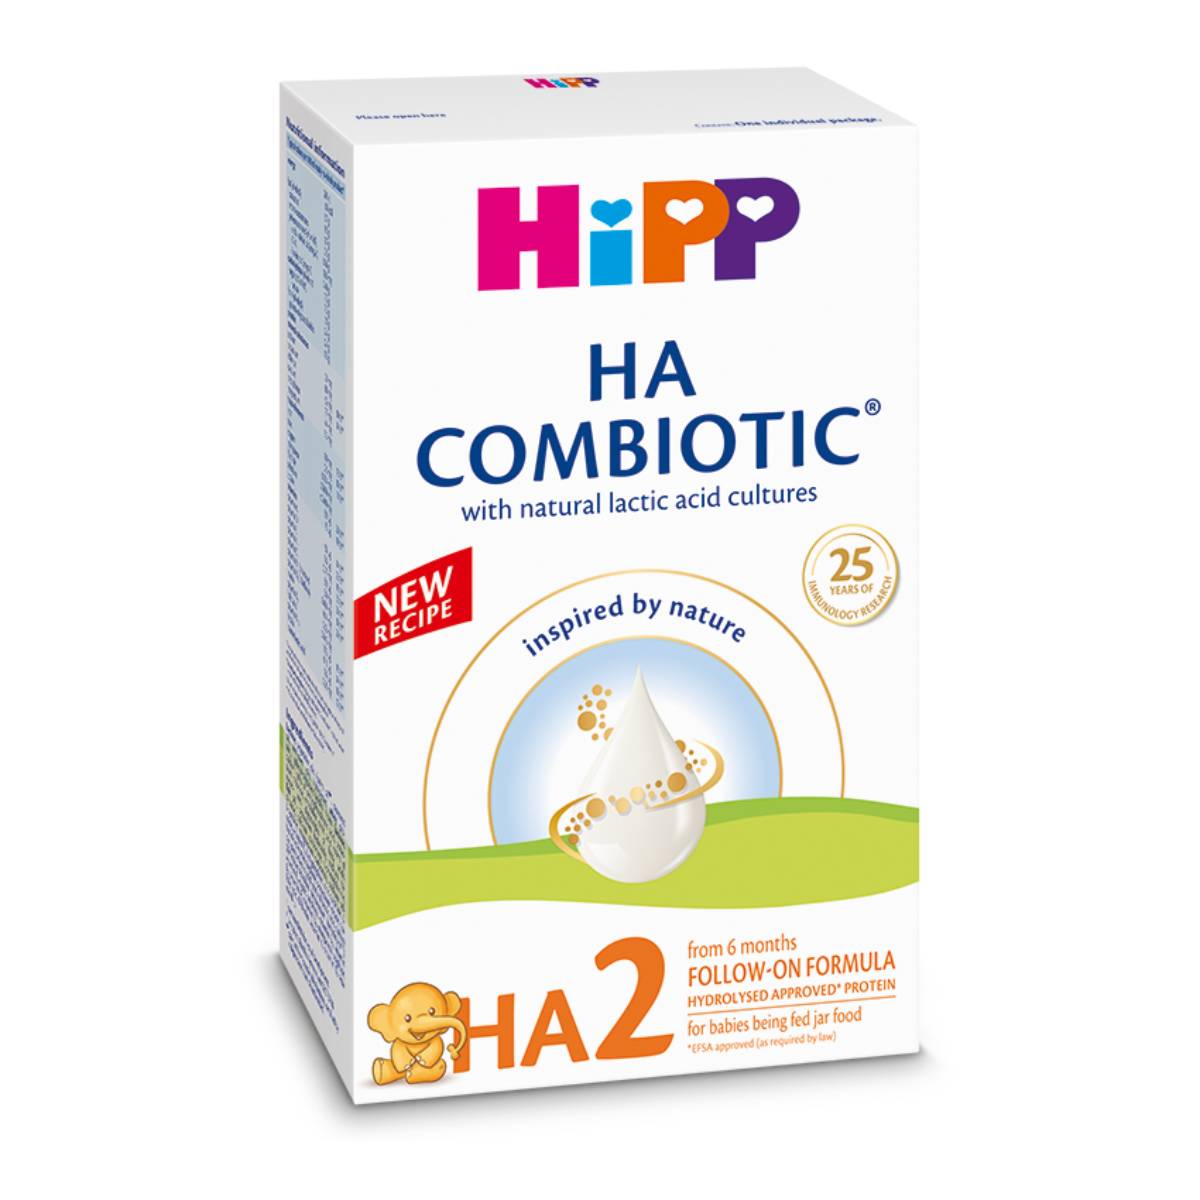 Lapte praf Hipp Combiotic HA 2, Hipp 350 g Lapte praf 2023-09-25